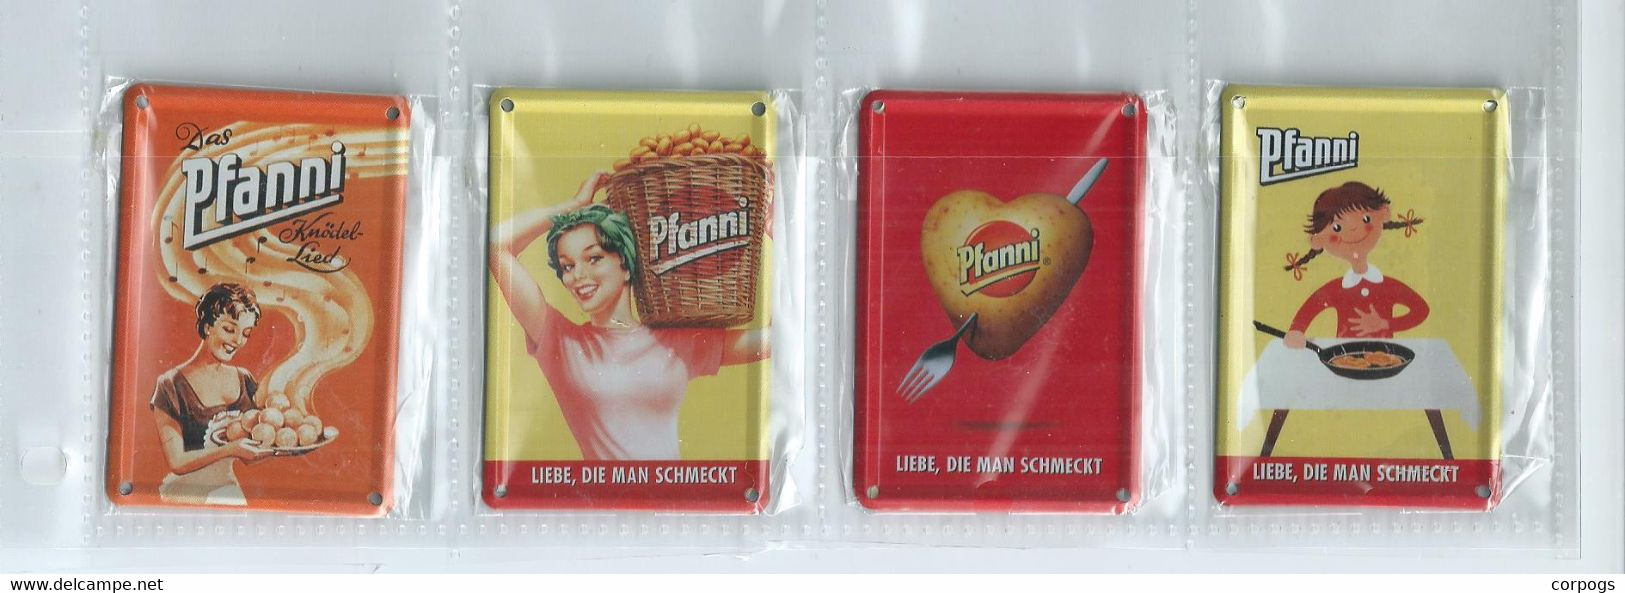 4 Duitse German Pfanni Magneten Magnets Aimant Like New Original Seal - Reklame